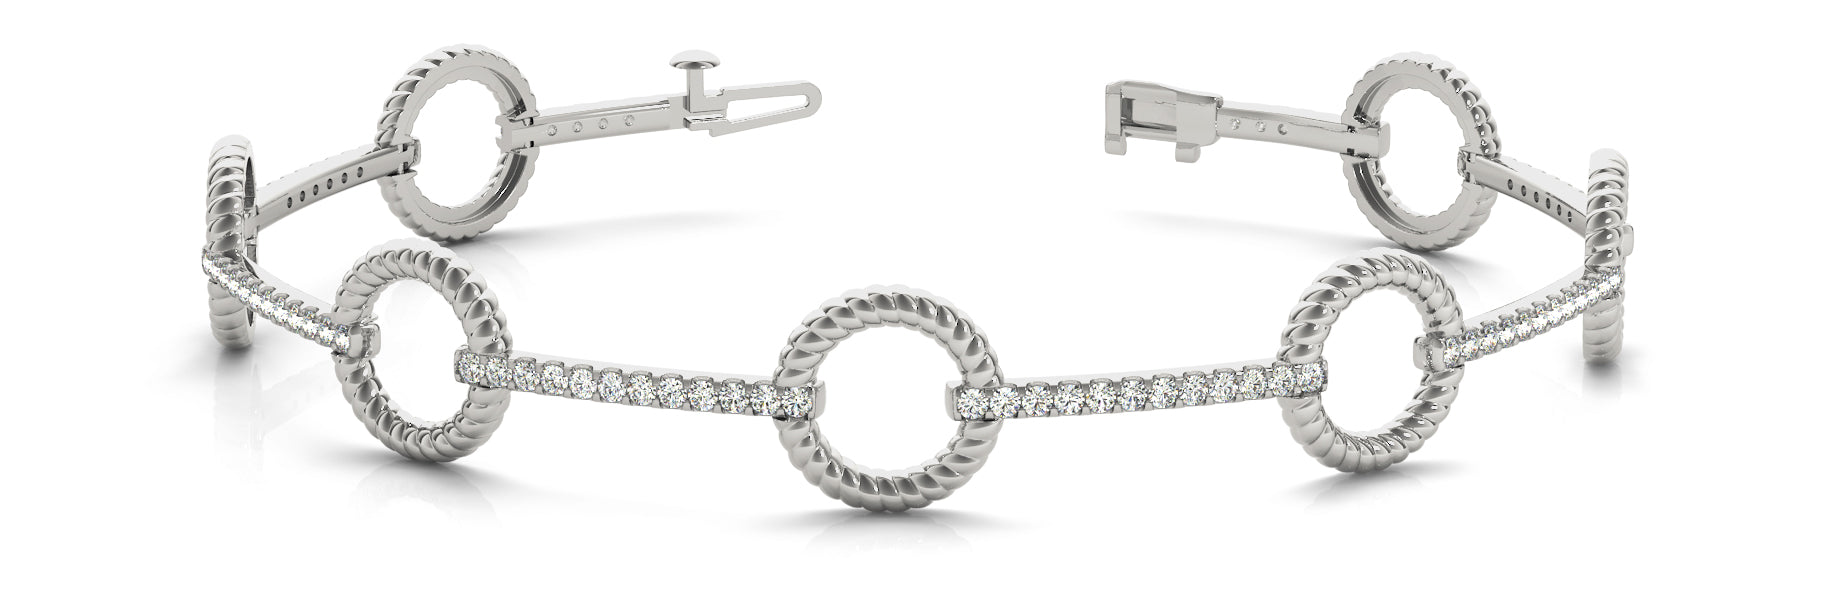 Fancy Diamond Bracelet Ladies 1.08ct tw - 14kt Gold